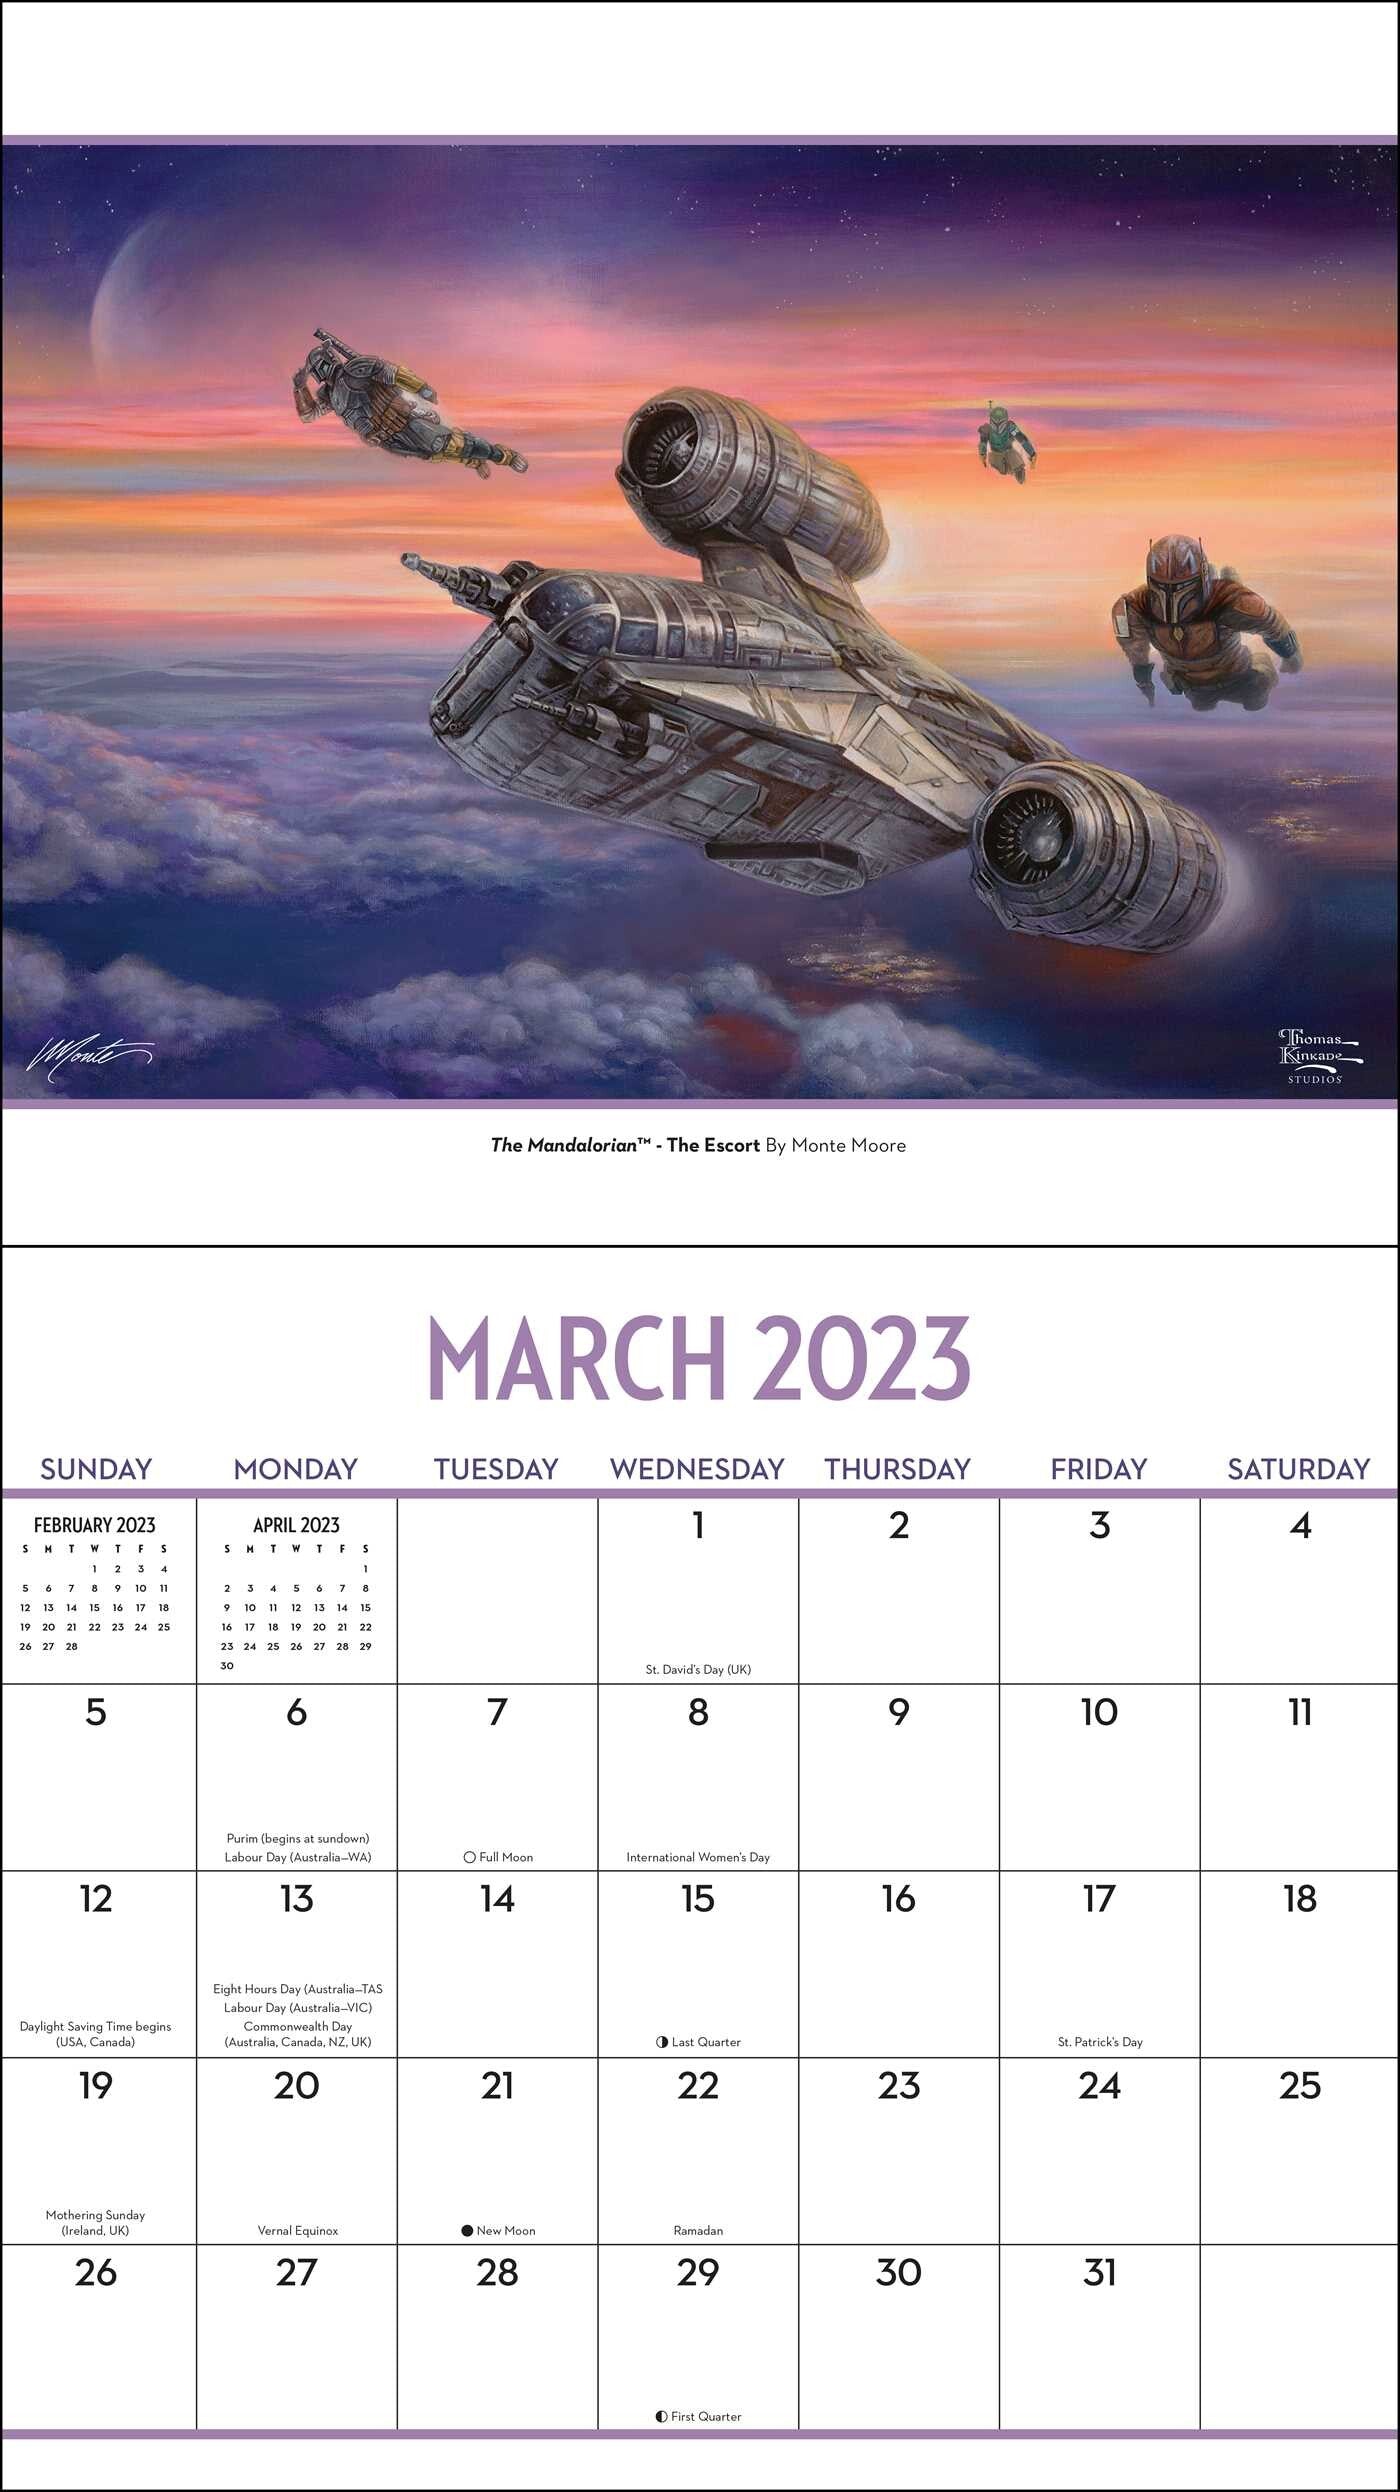 The Mandalorian by Thomas Kinkade Studios 2023 Deluxe Wall Calendar